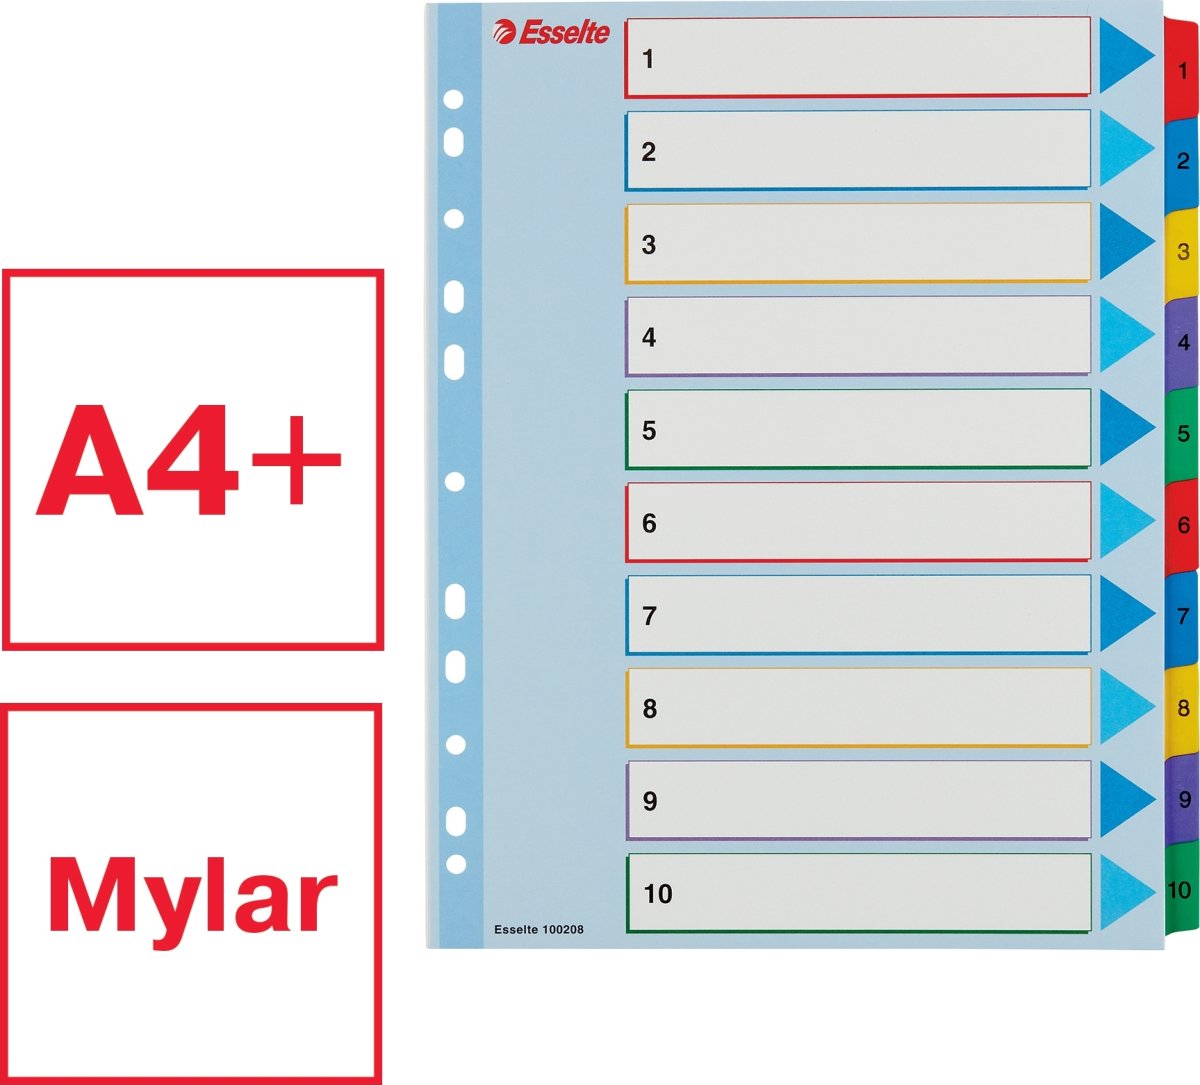 Esselte Mylar register A4, 1-10, overskrivbar